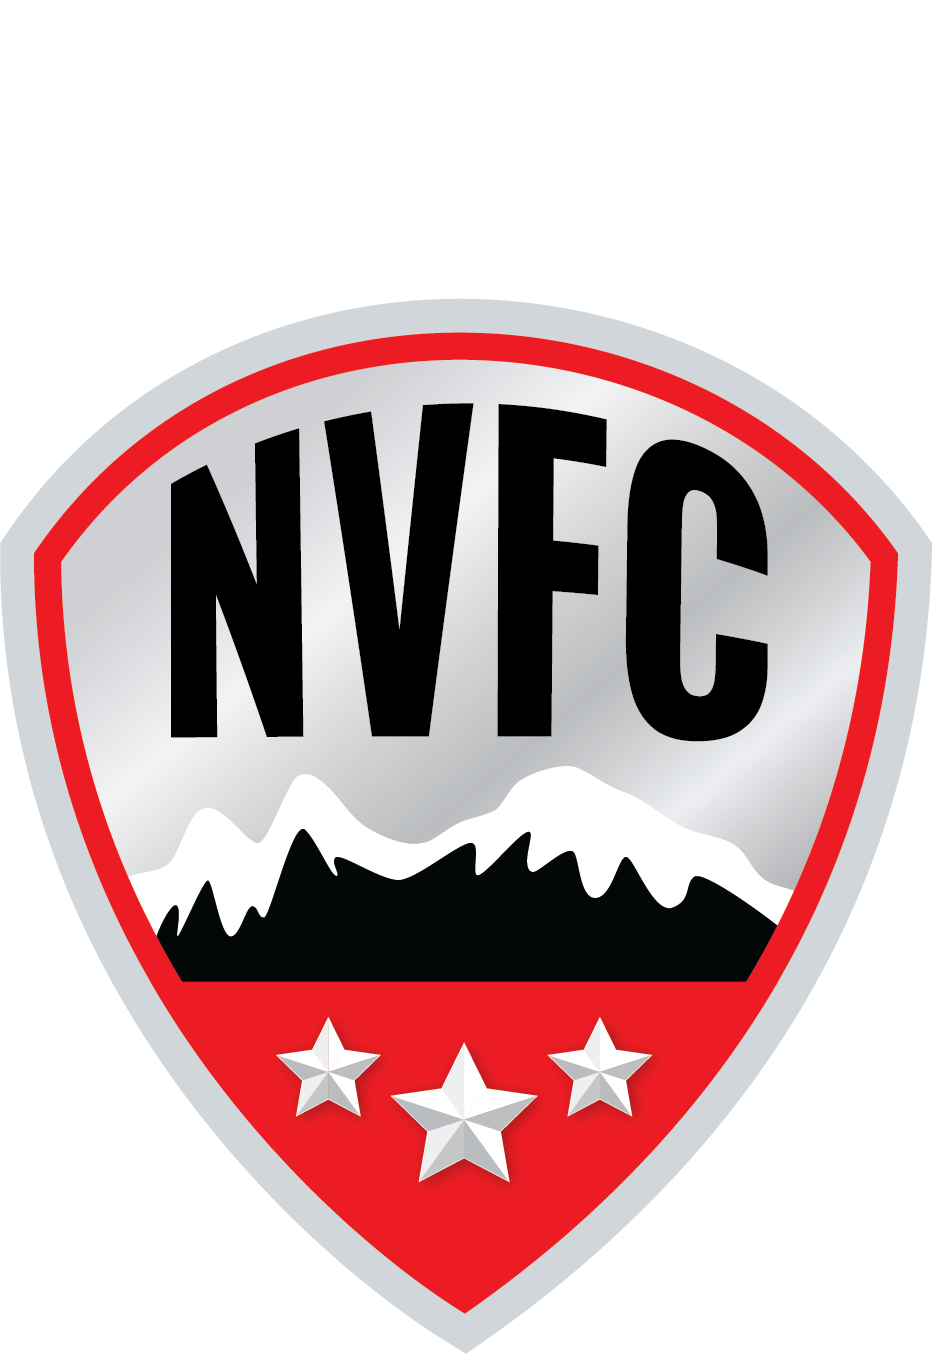 North Vancouver FC